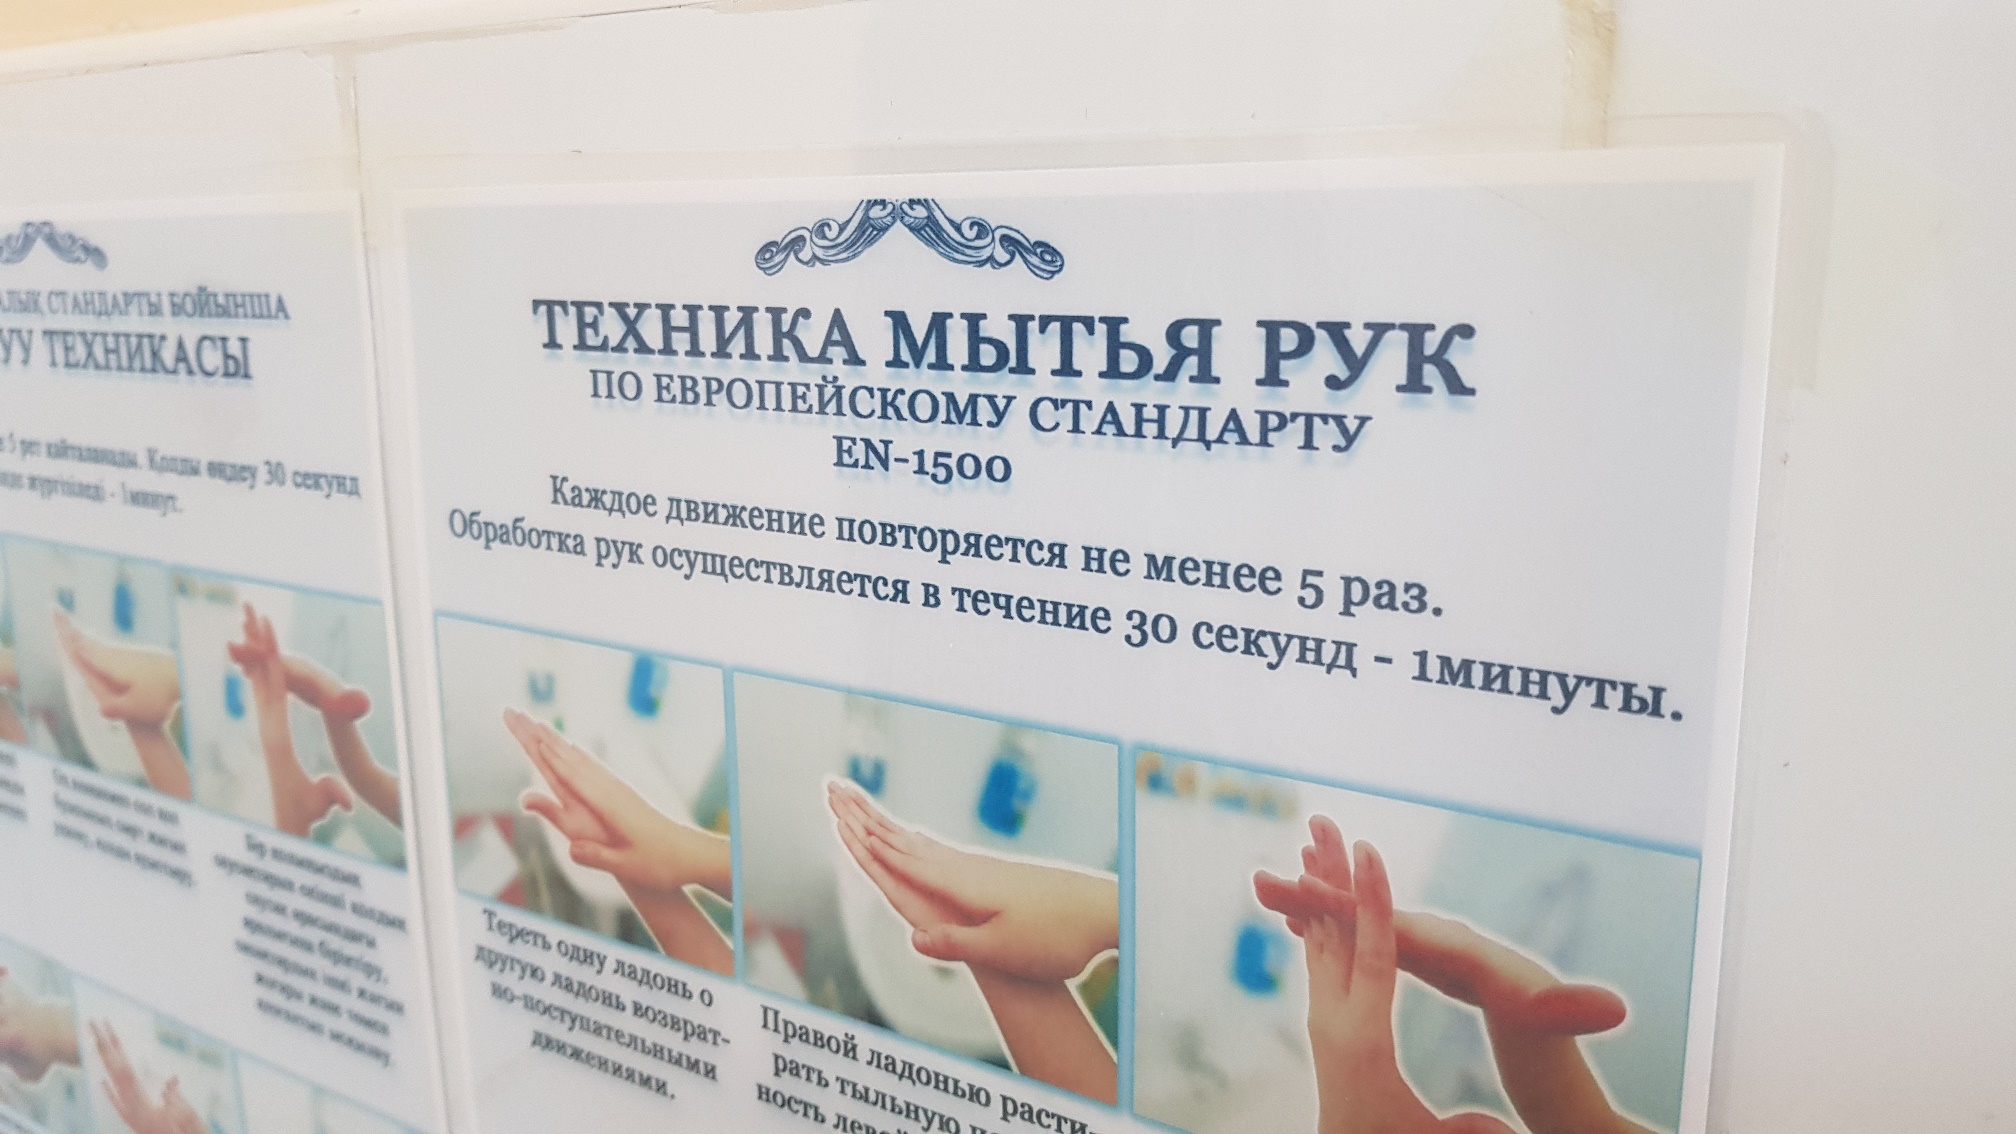 Стандарты мытье. Европейский стандарт мытья рук en-1500. 111 Приказ МЗ РК мытье рук. Техника обработки рук Европейский стандарт en-1500. Гигиеническая обработка рук Ен 1500.